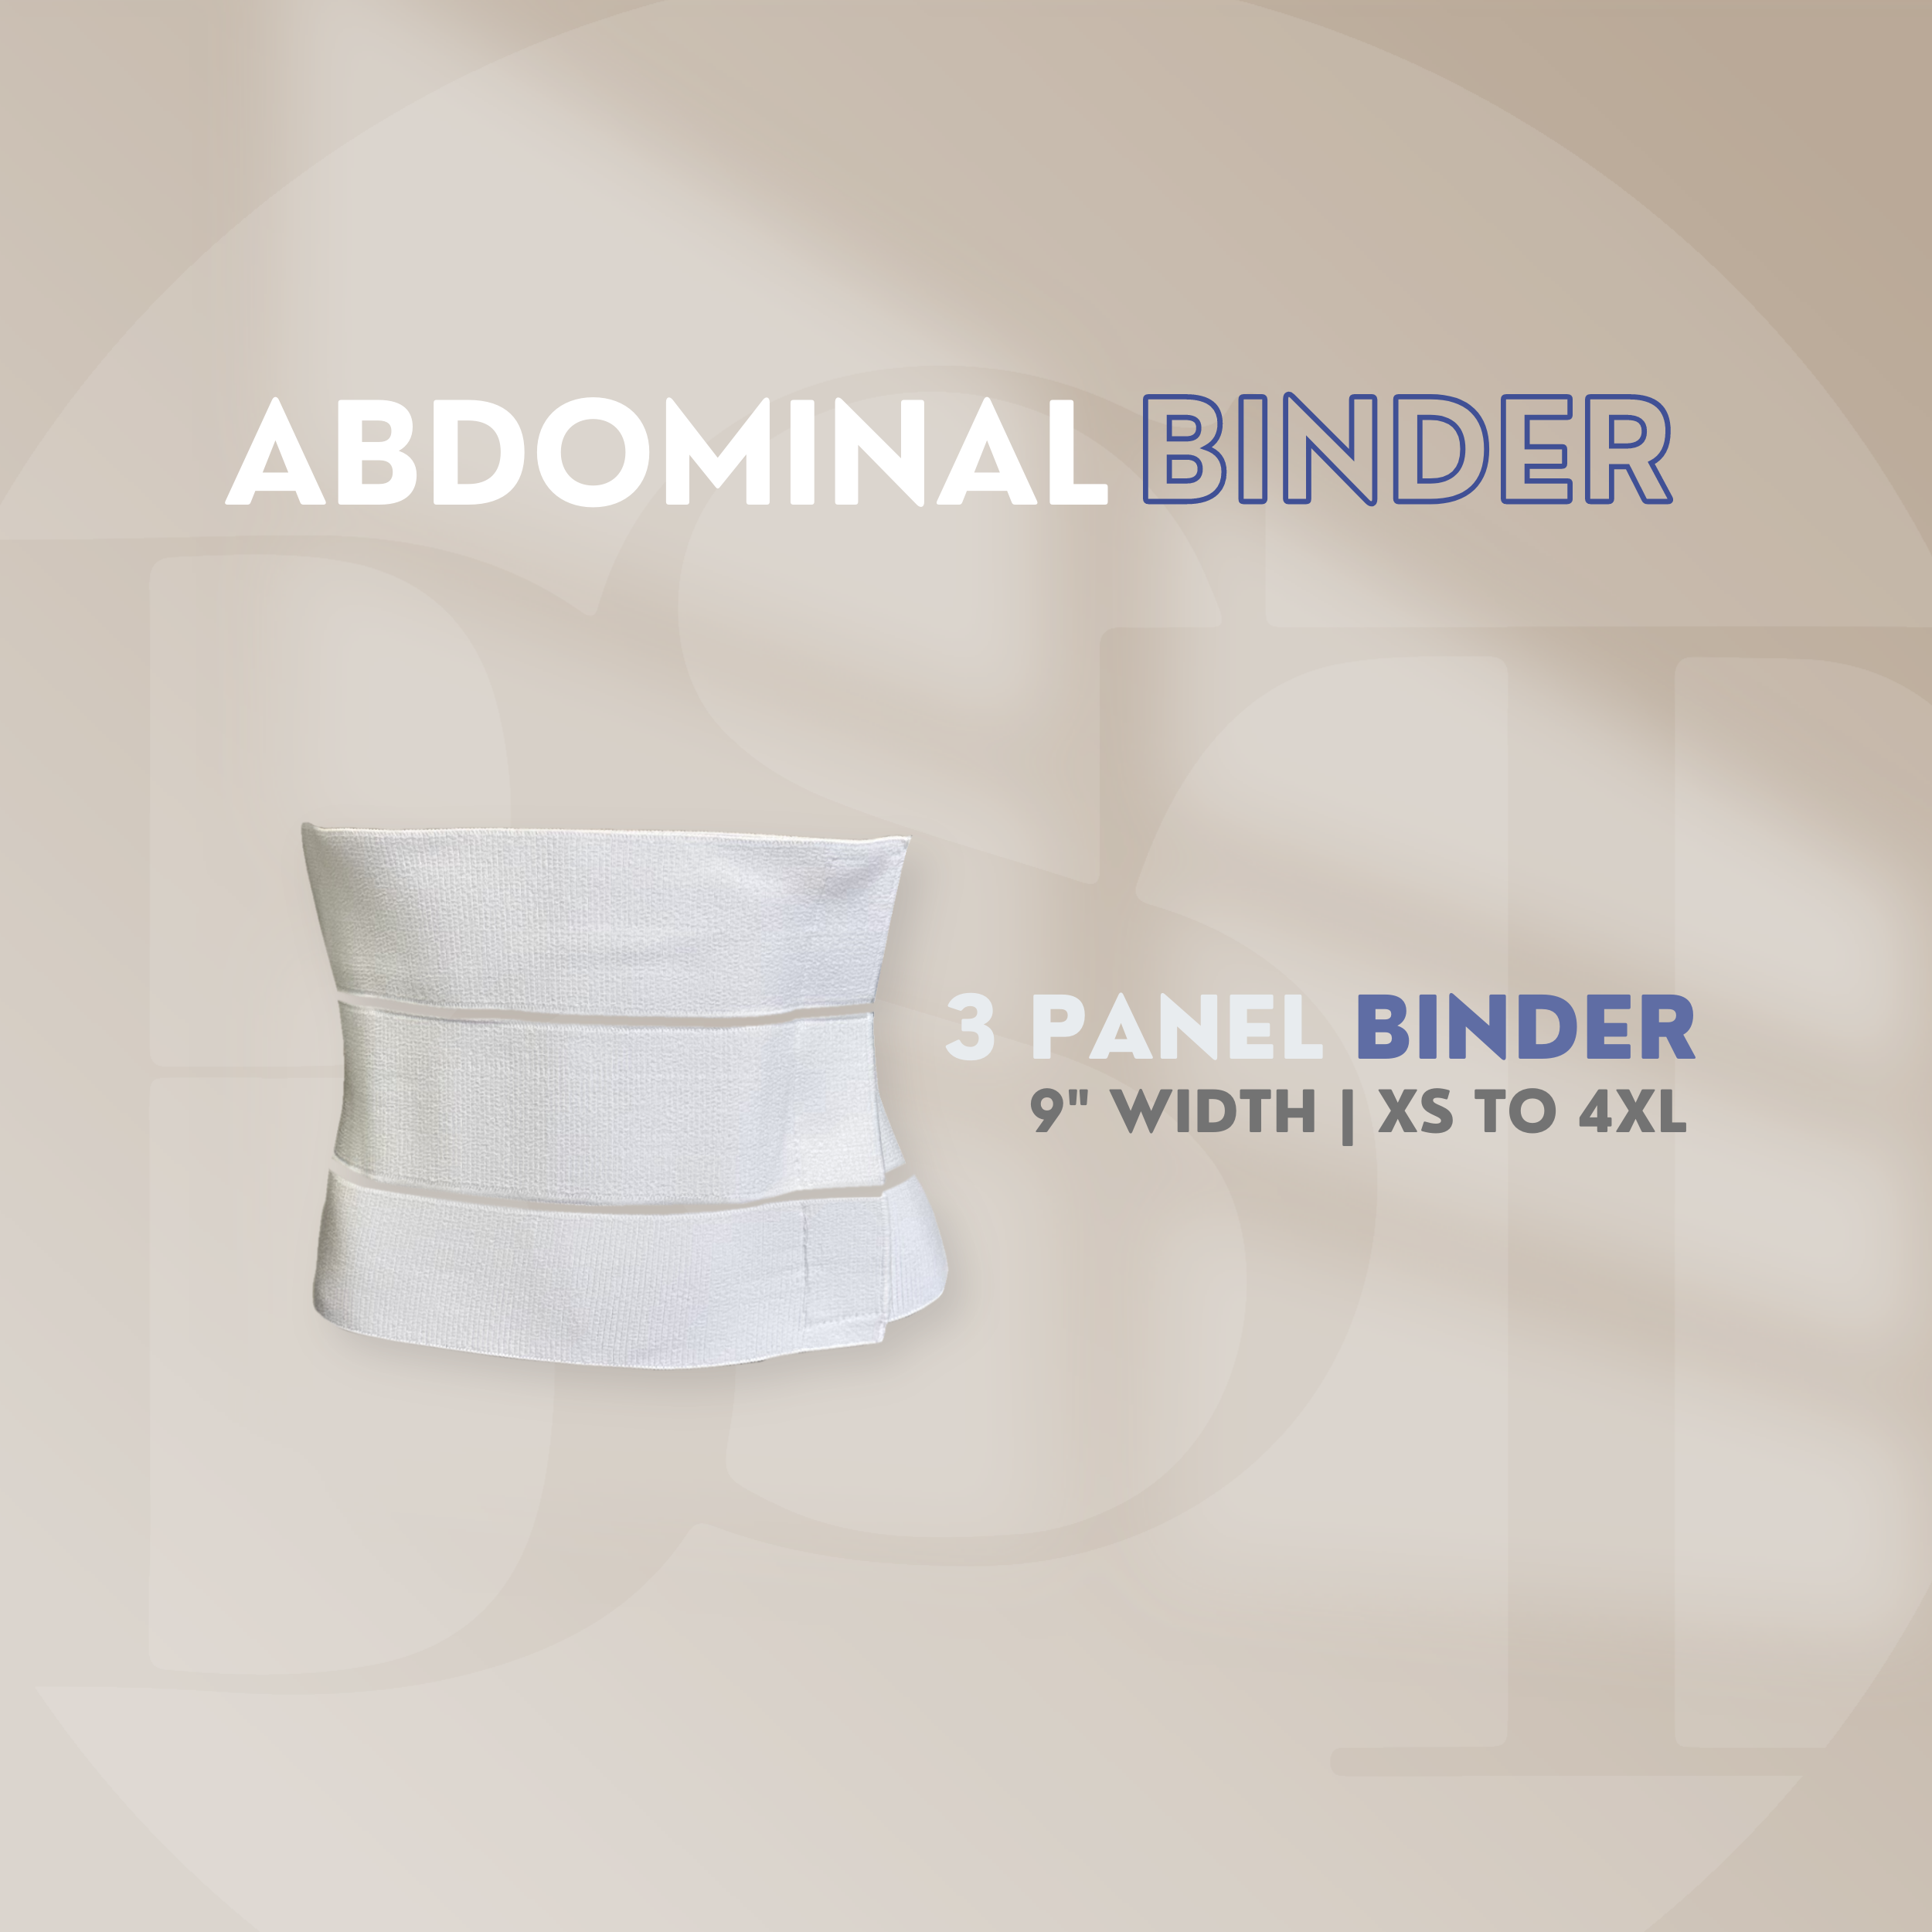 Buy Wink Womens' Belly & Hip Shaper Abdominal Binder Online at